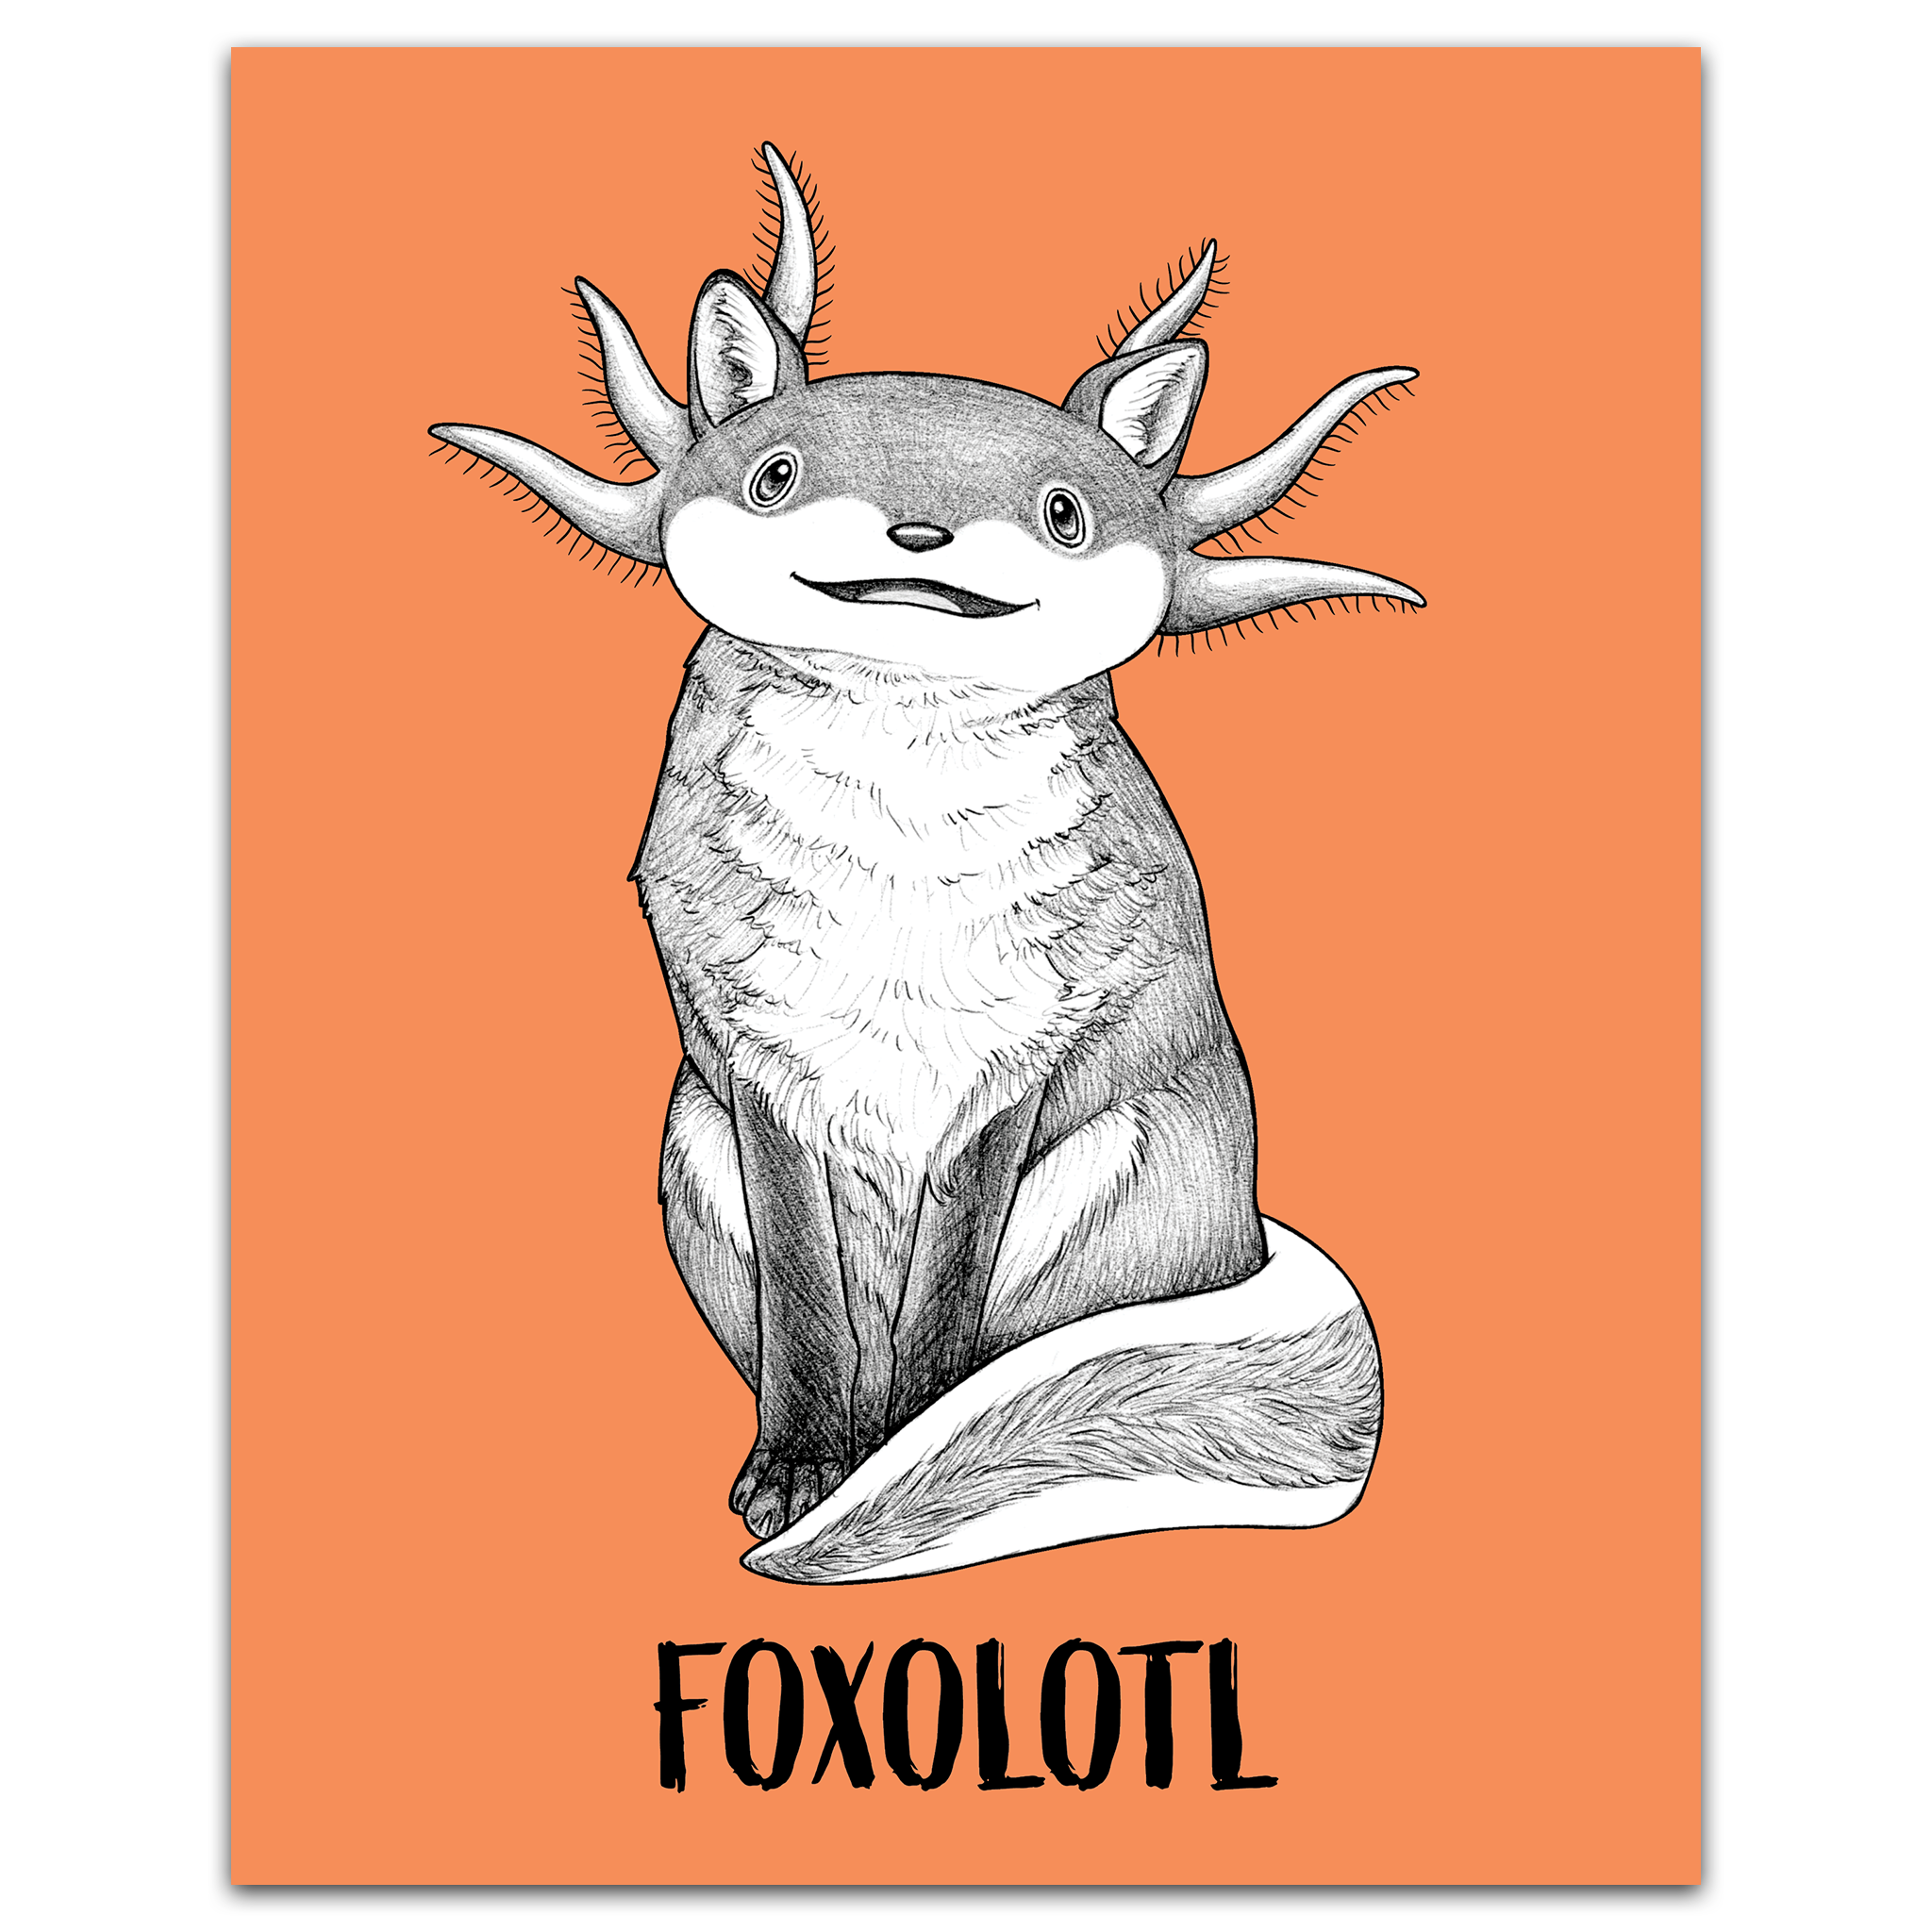 Foxolotl | Fox + Axolotl Hybrid Animal | 8x10" Color Print